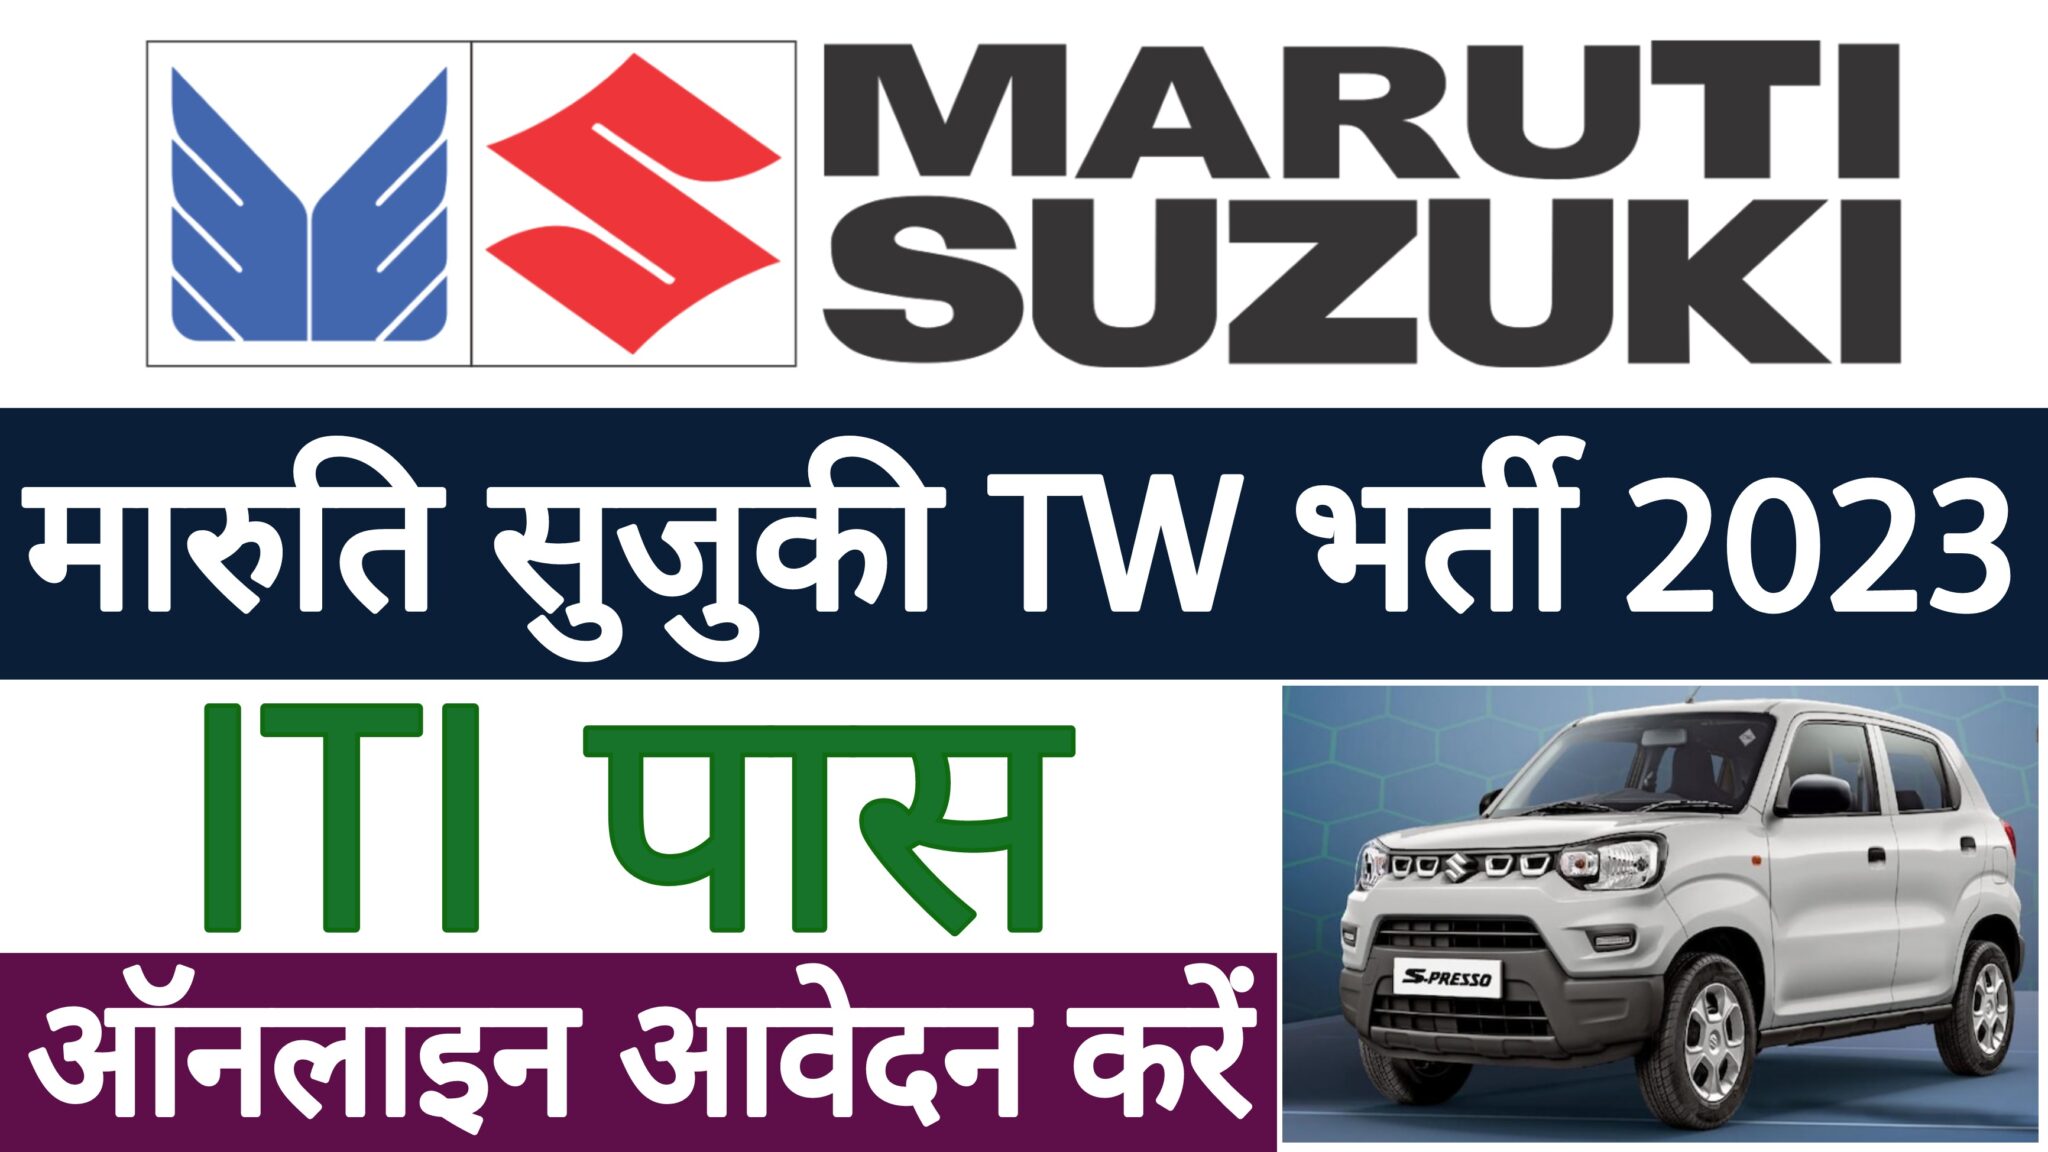 Maruti Suzuki TW Recruitment 2023 ITI Education